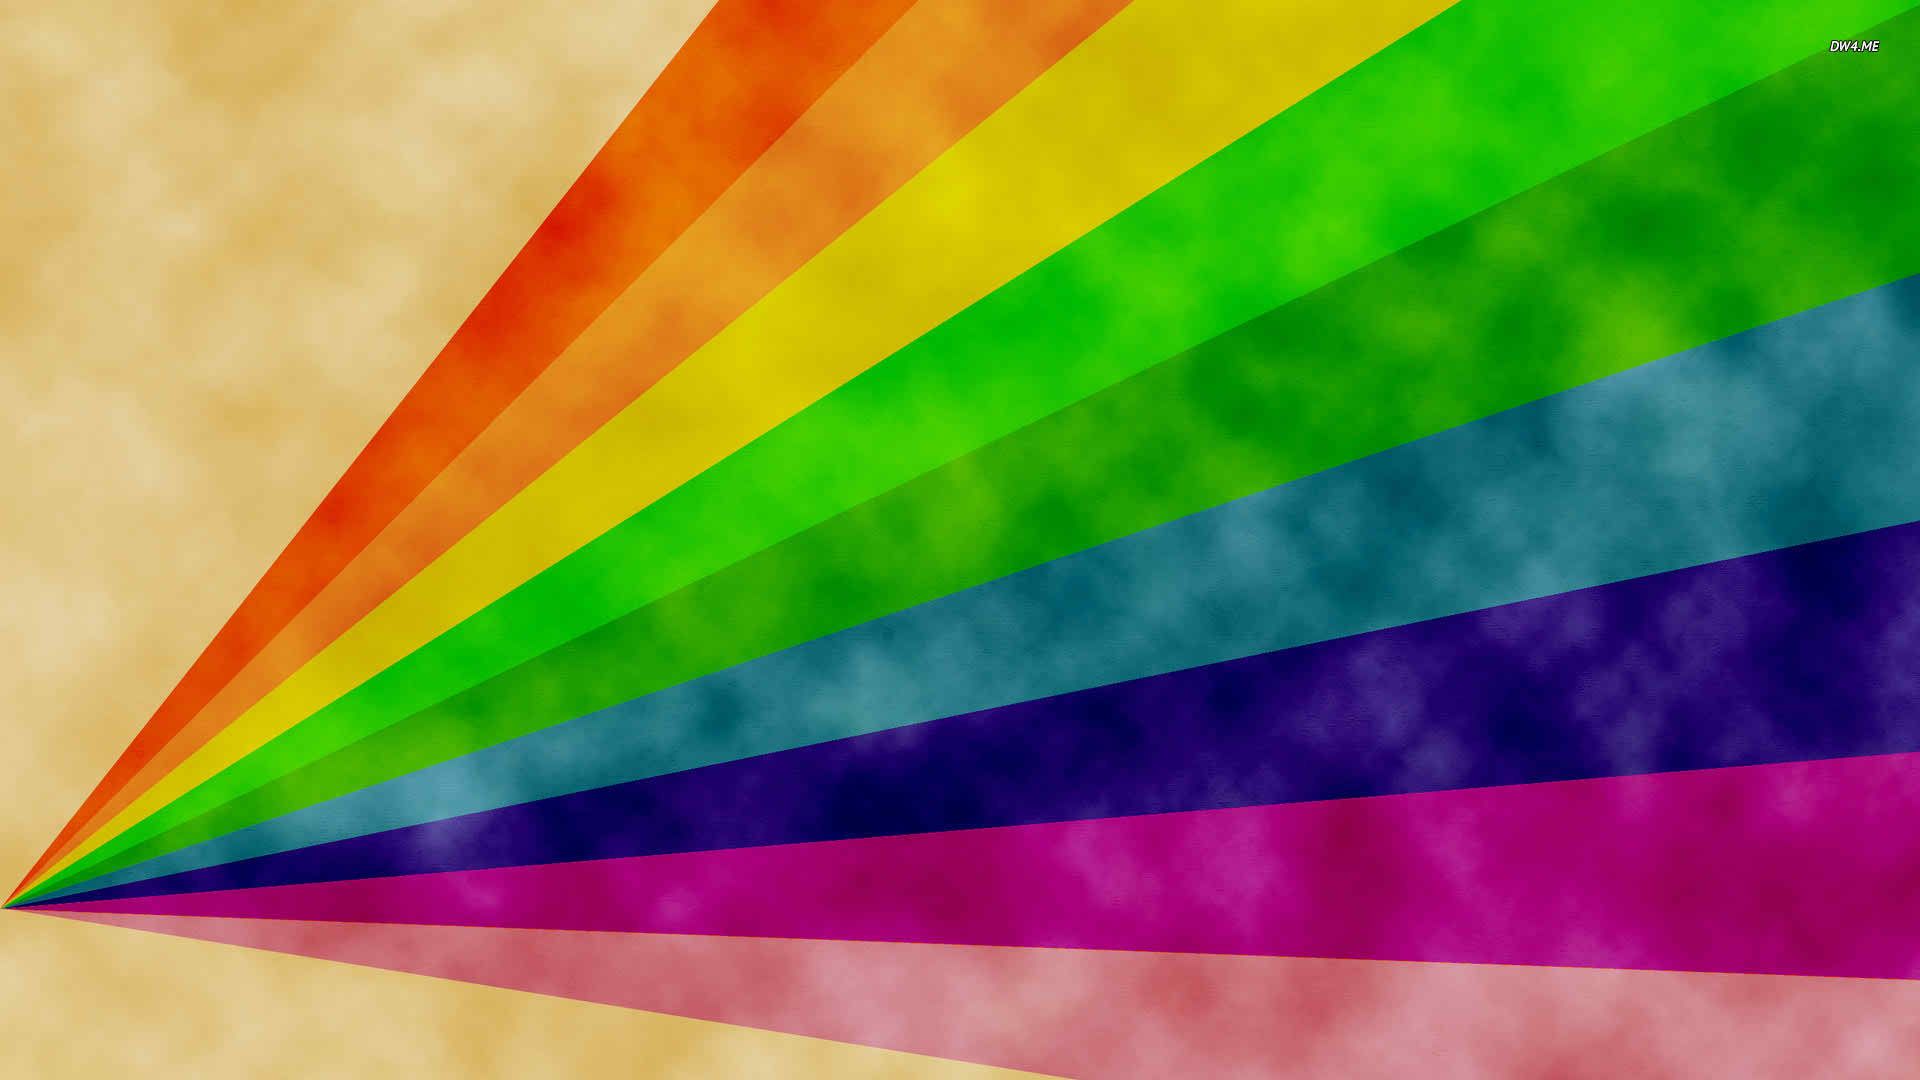 Rainbow Wallpapers, Descargar imagen de un impresionante arcoiris hd